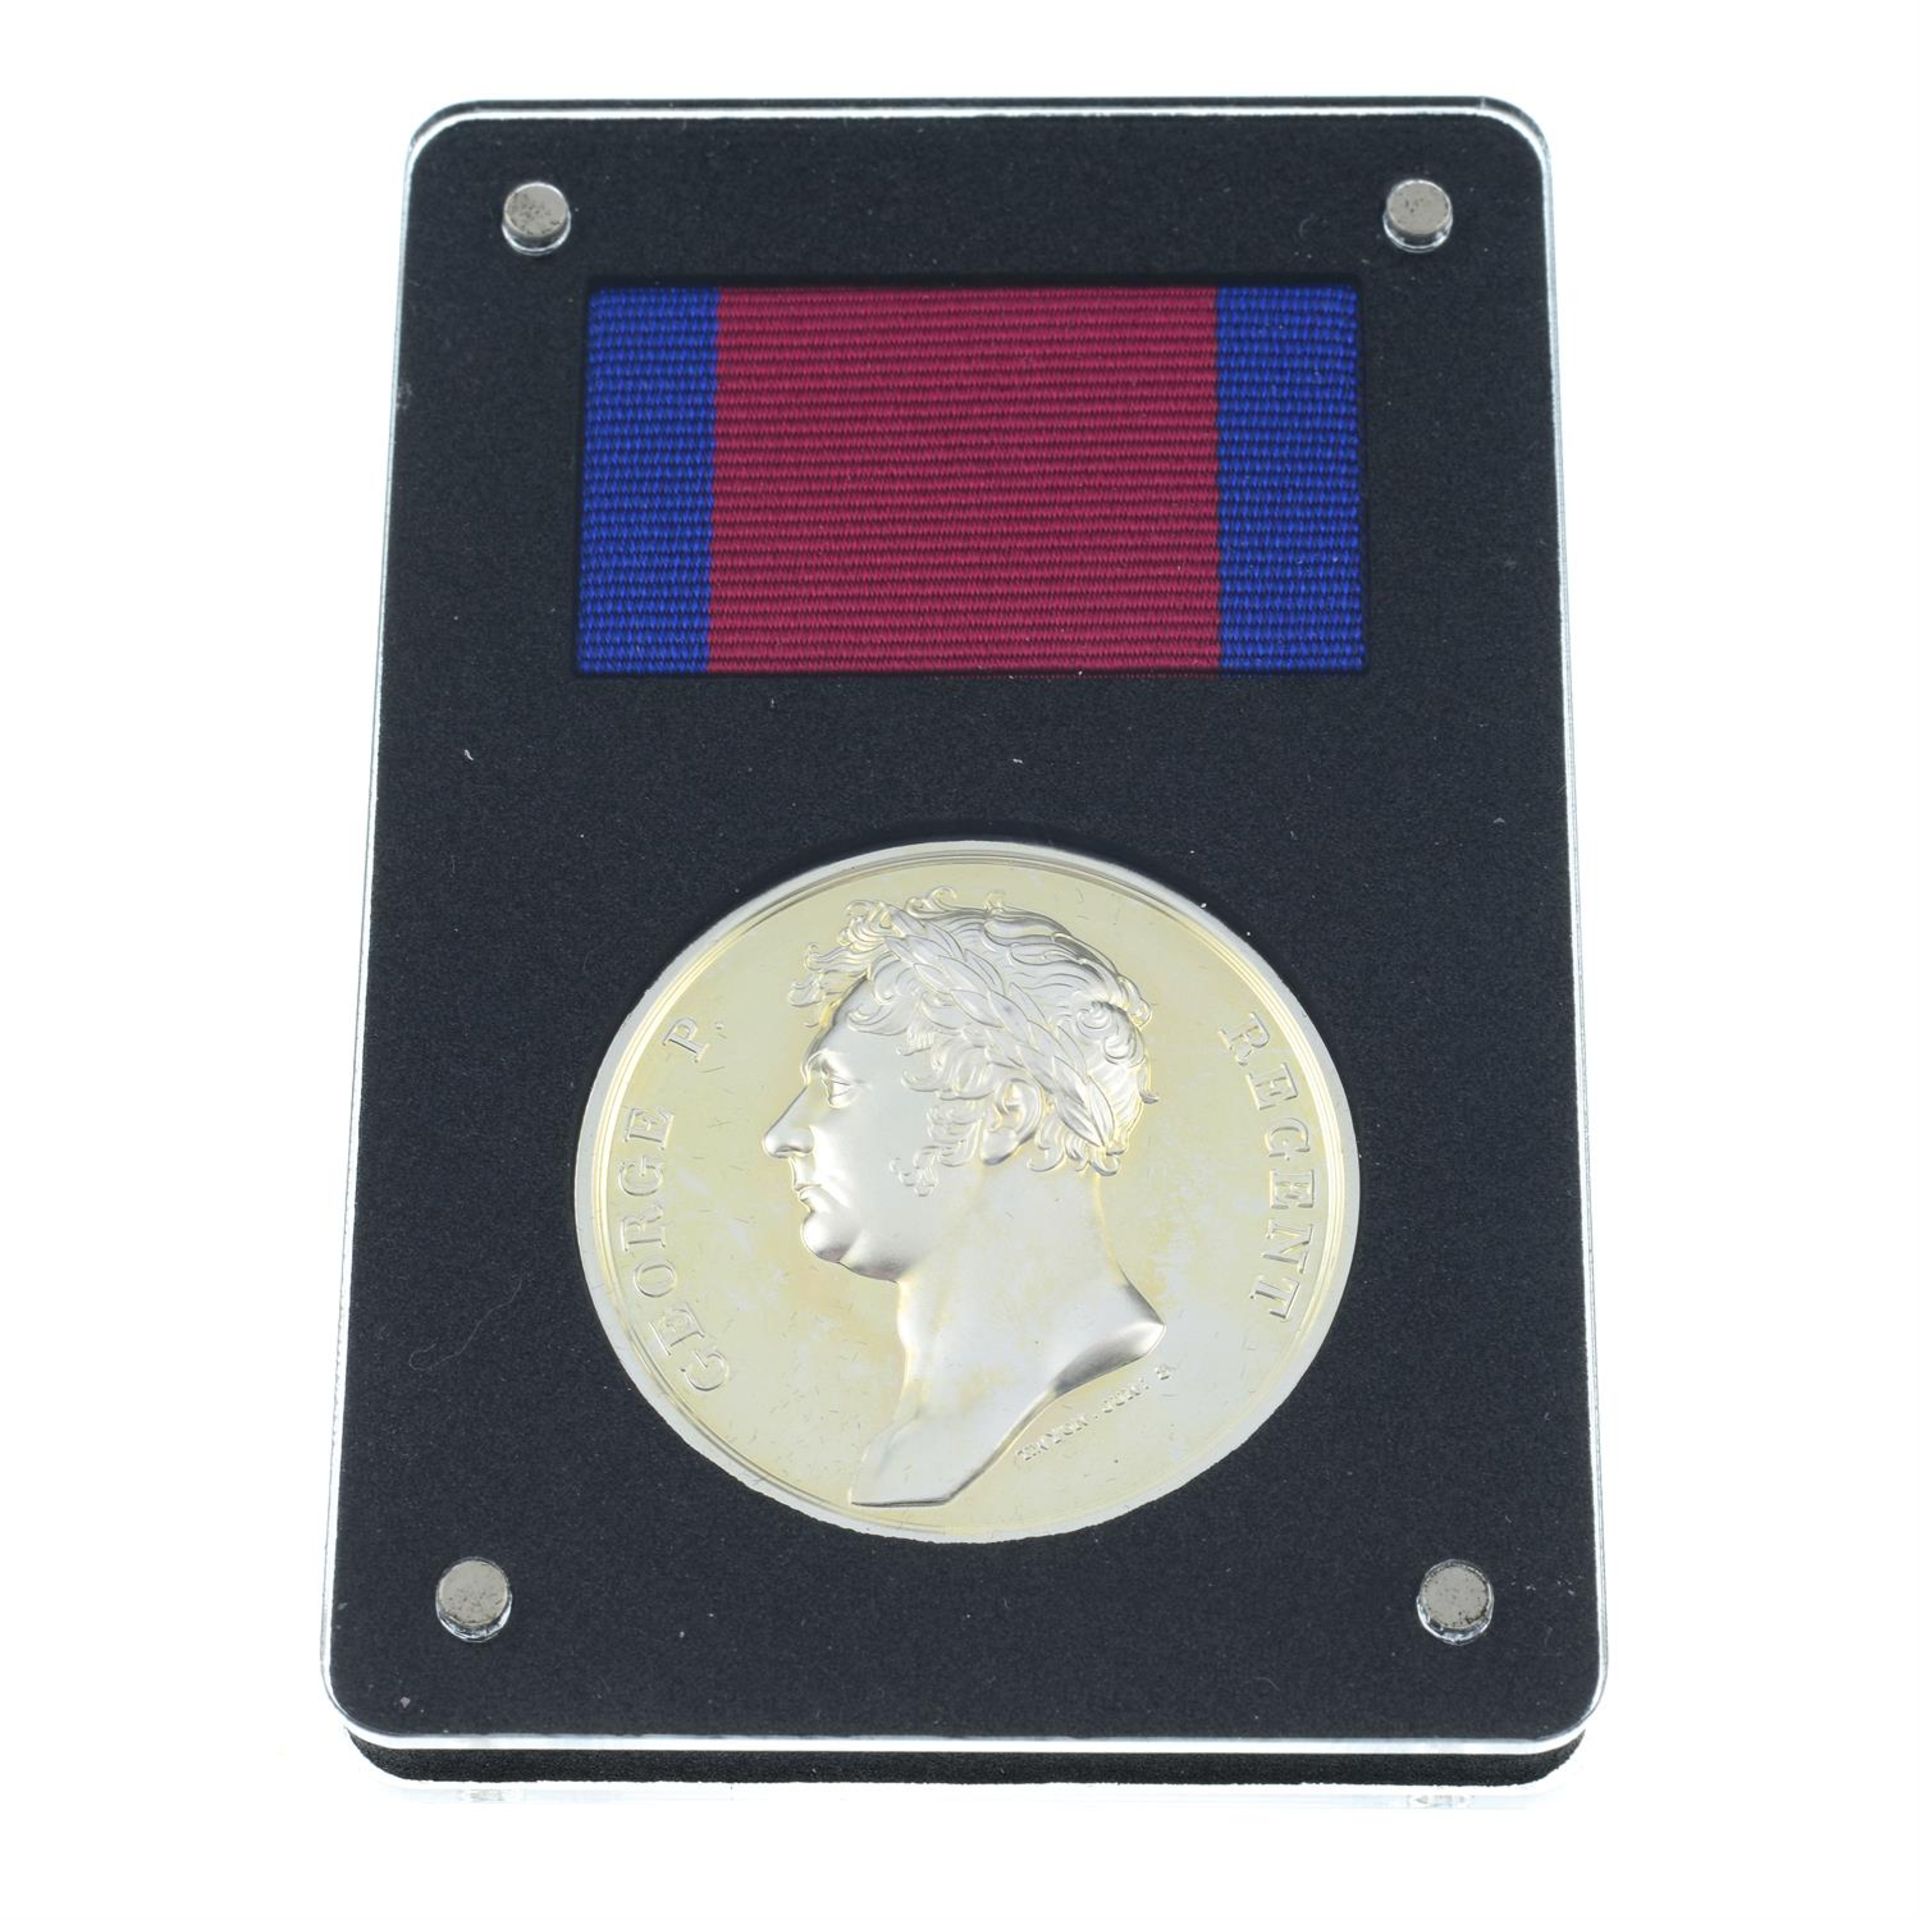 Battle of Waterloo, Bicentenary medal 2015. - Image 2 of 3